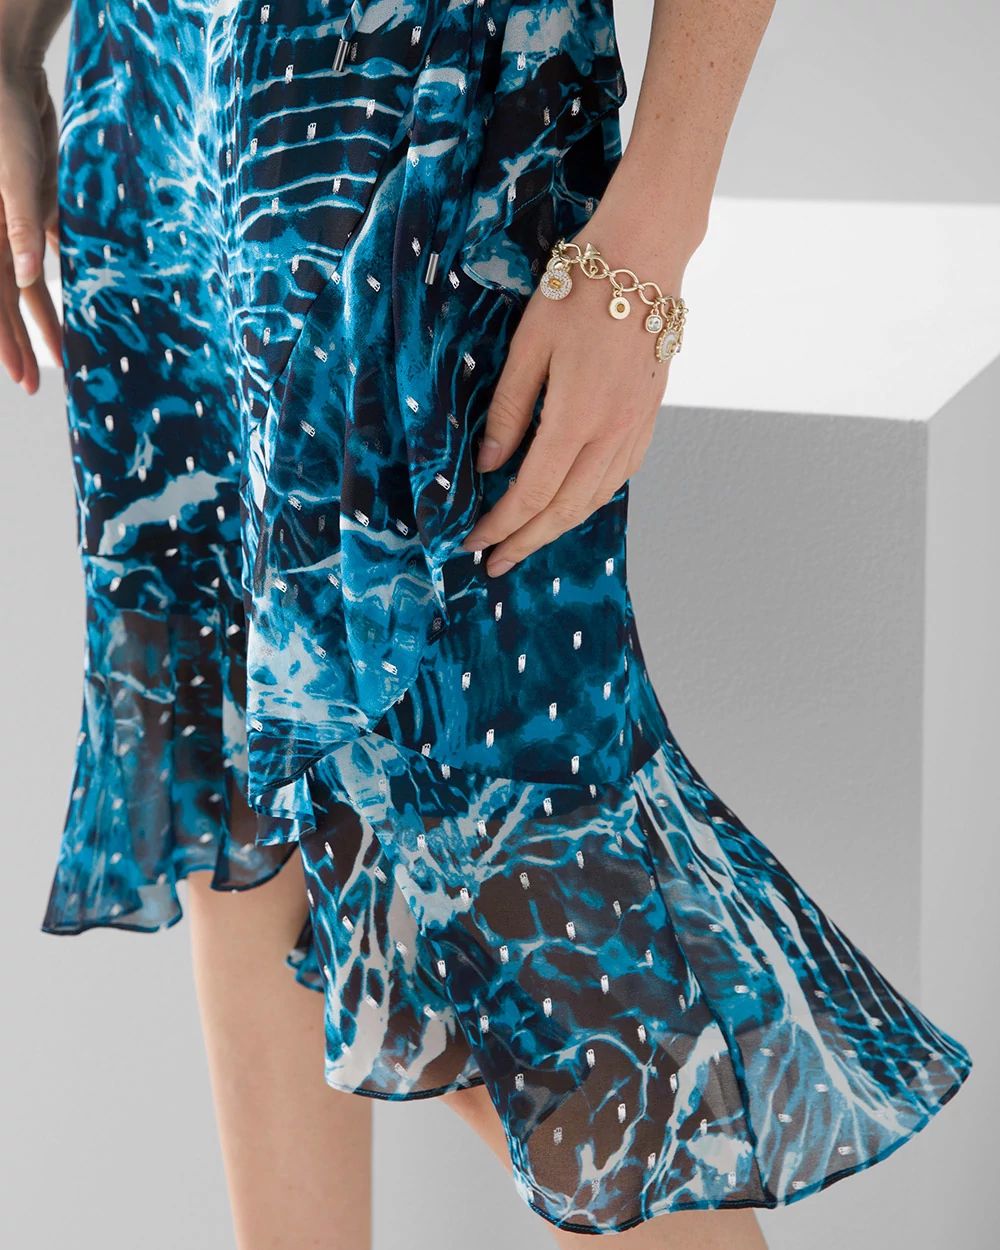 Sleeveless Ruffle Wrap Dress click to view larger image.